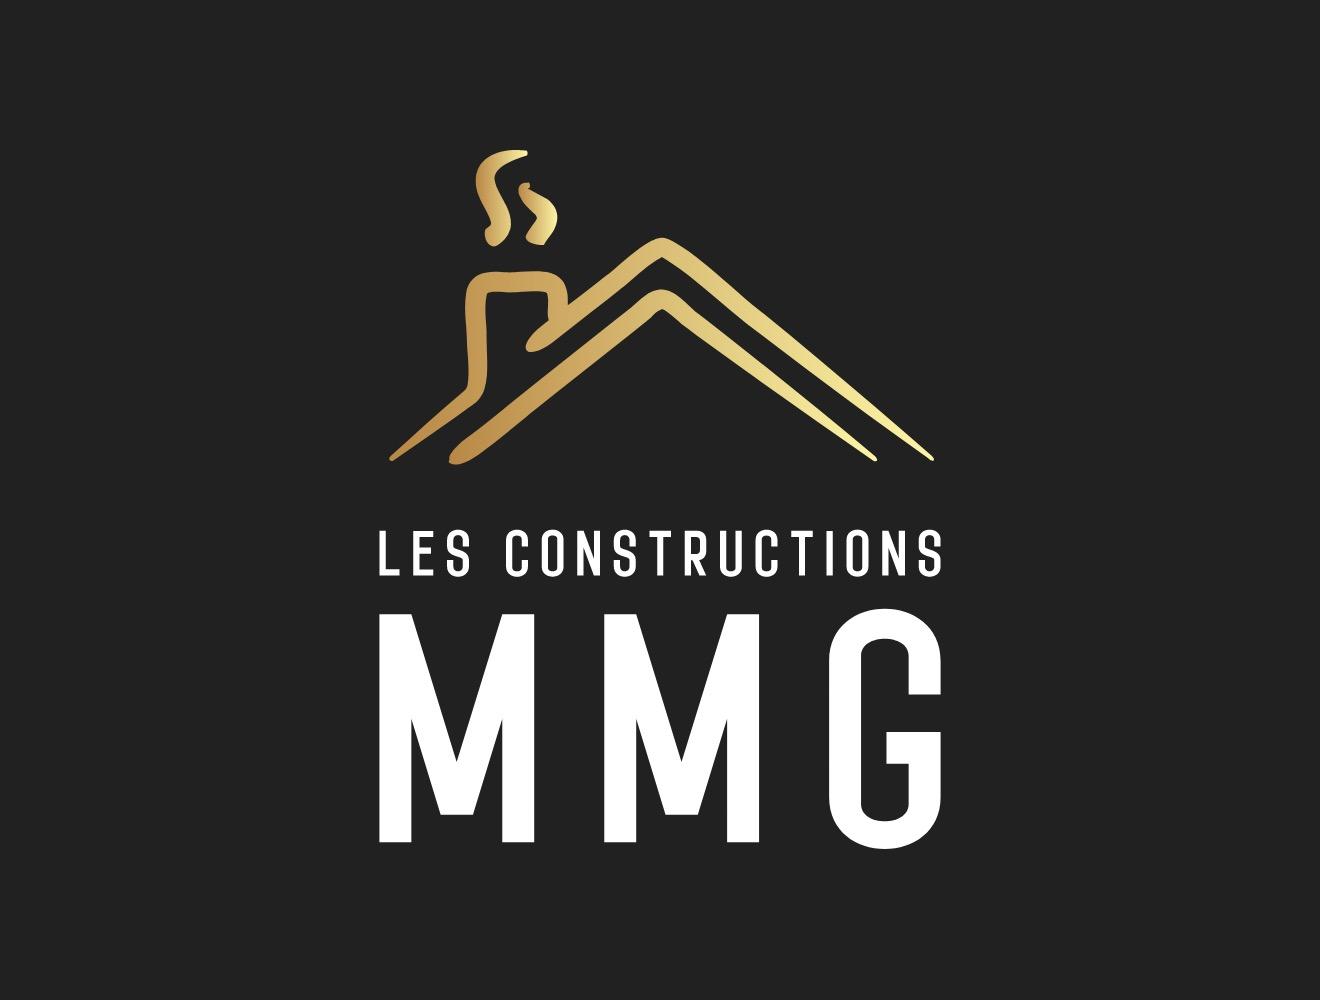 Les Constructions MMG inc.